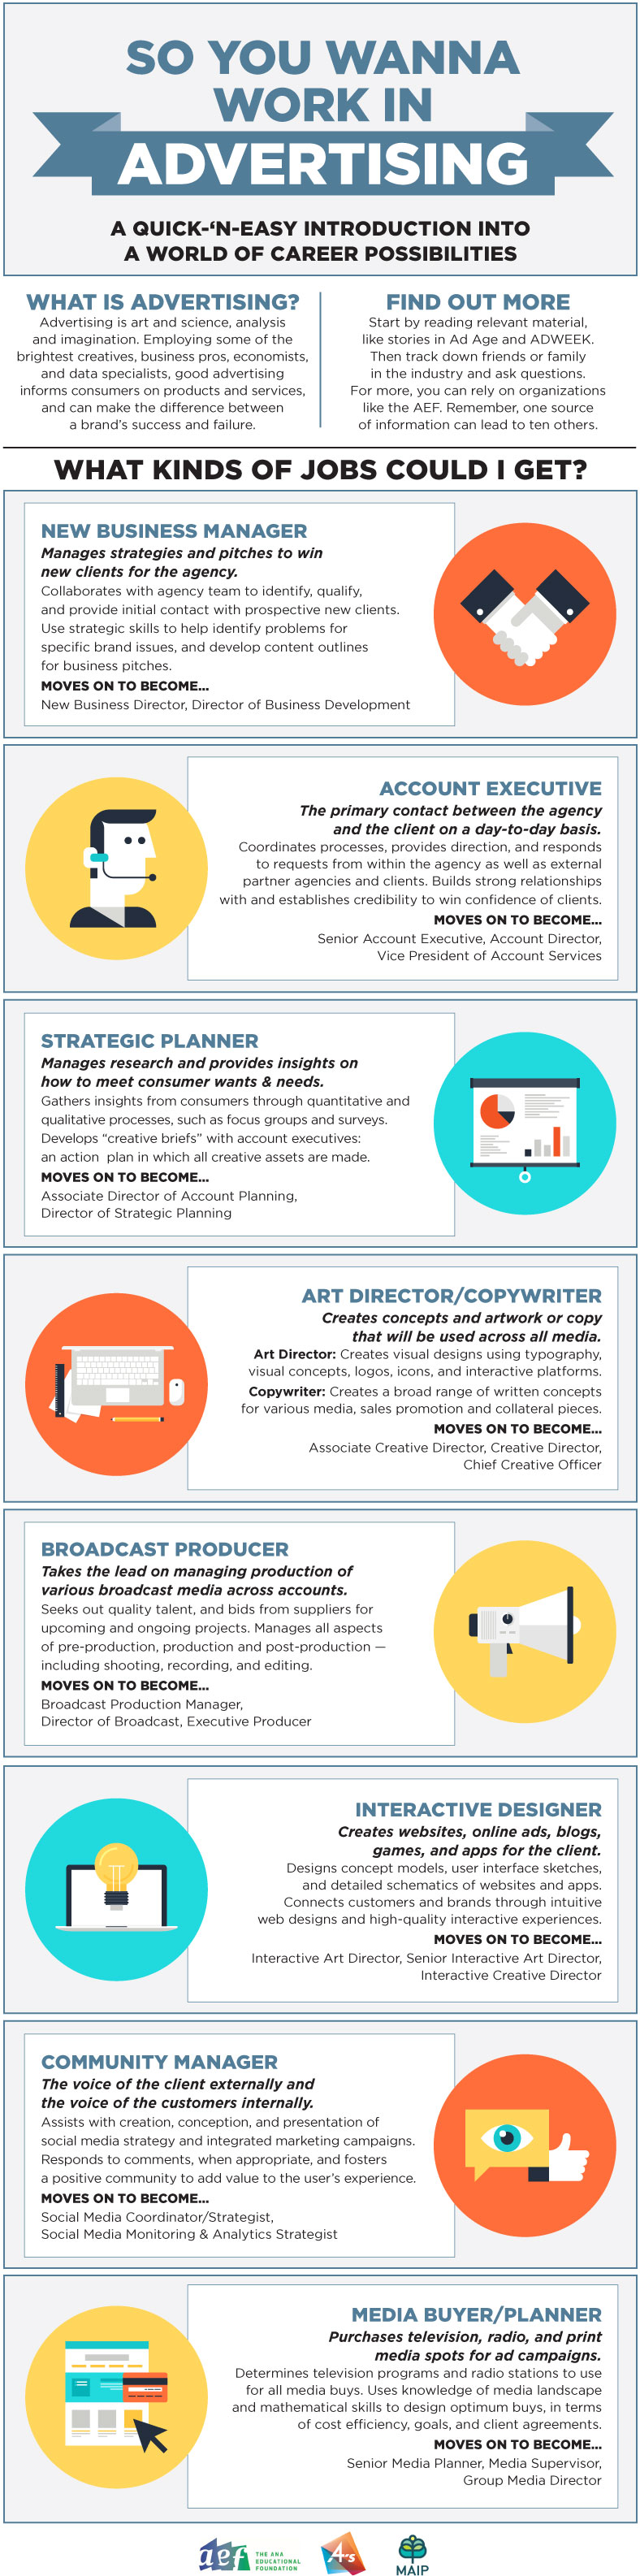 infographic advertising agencies